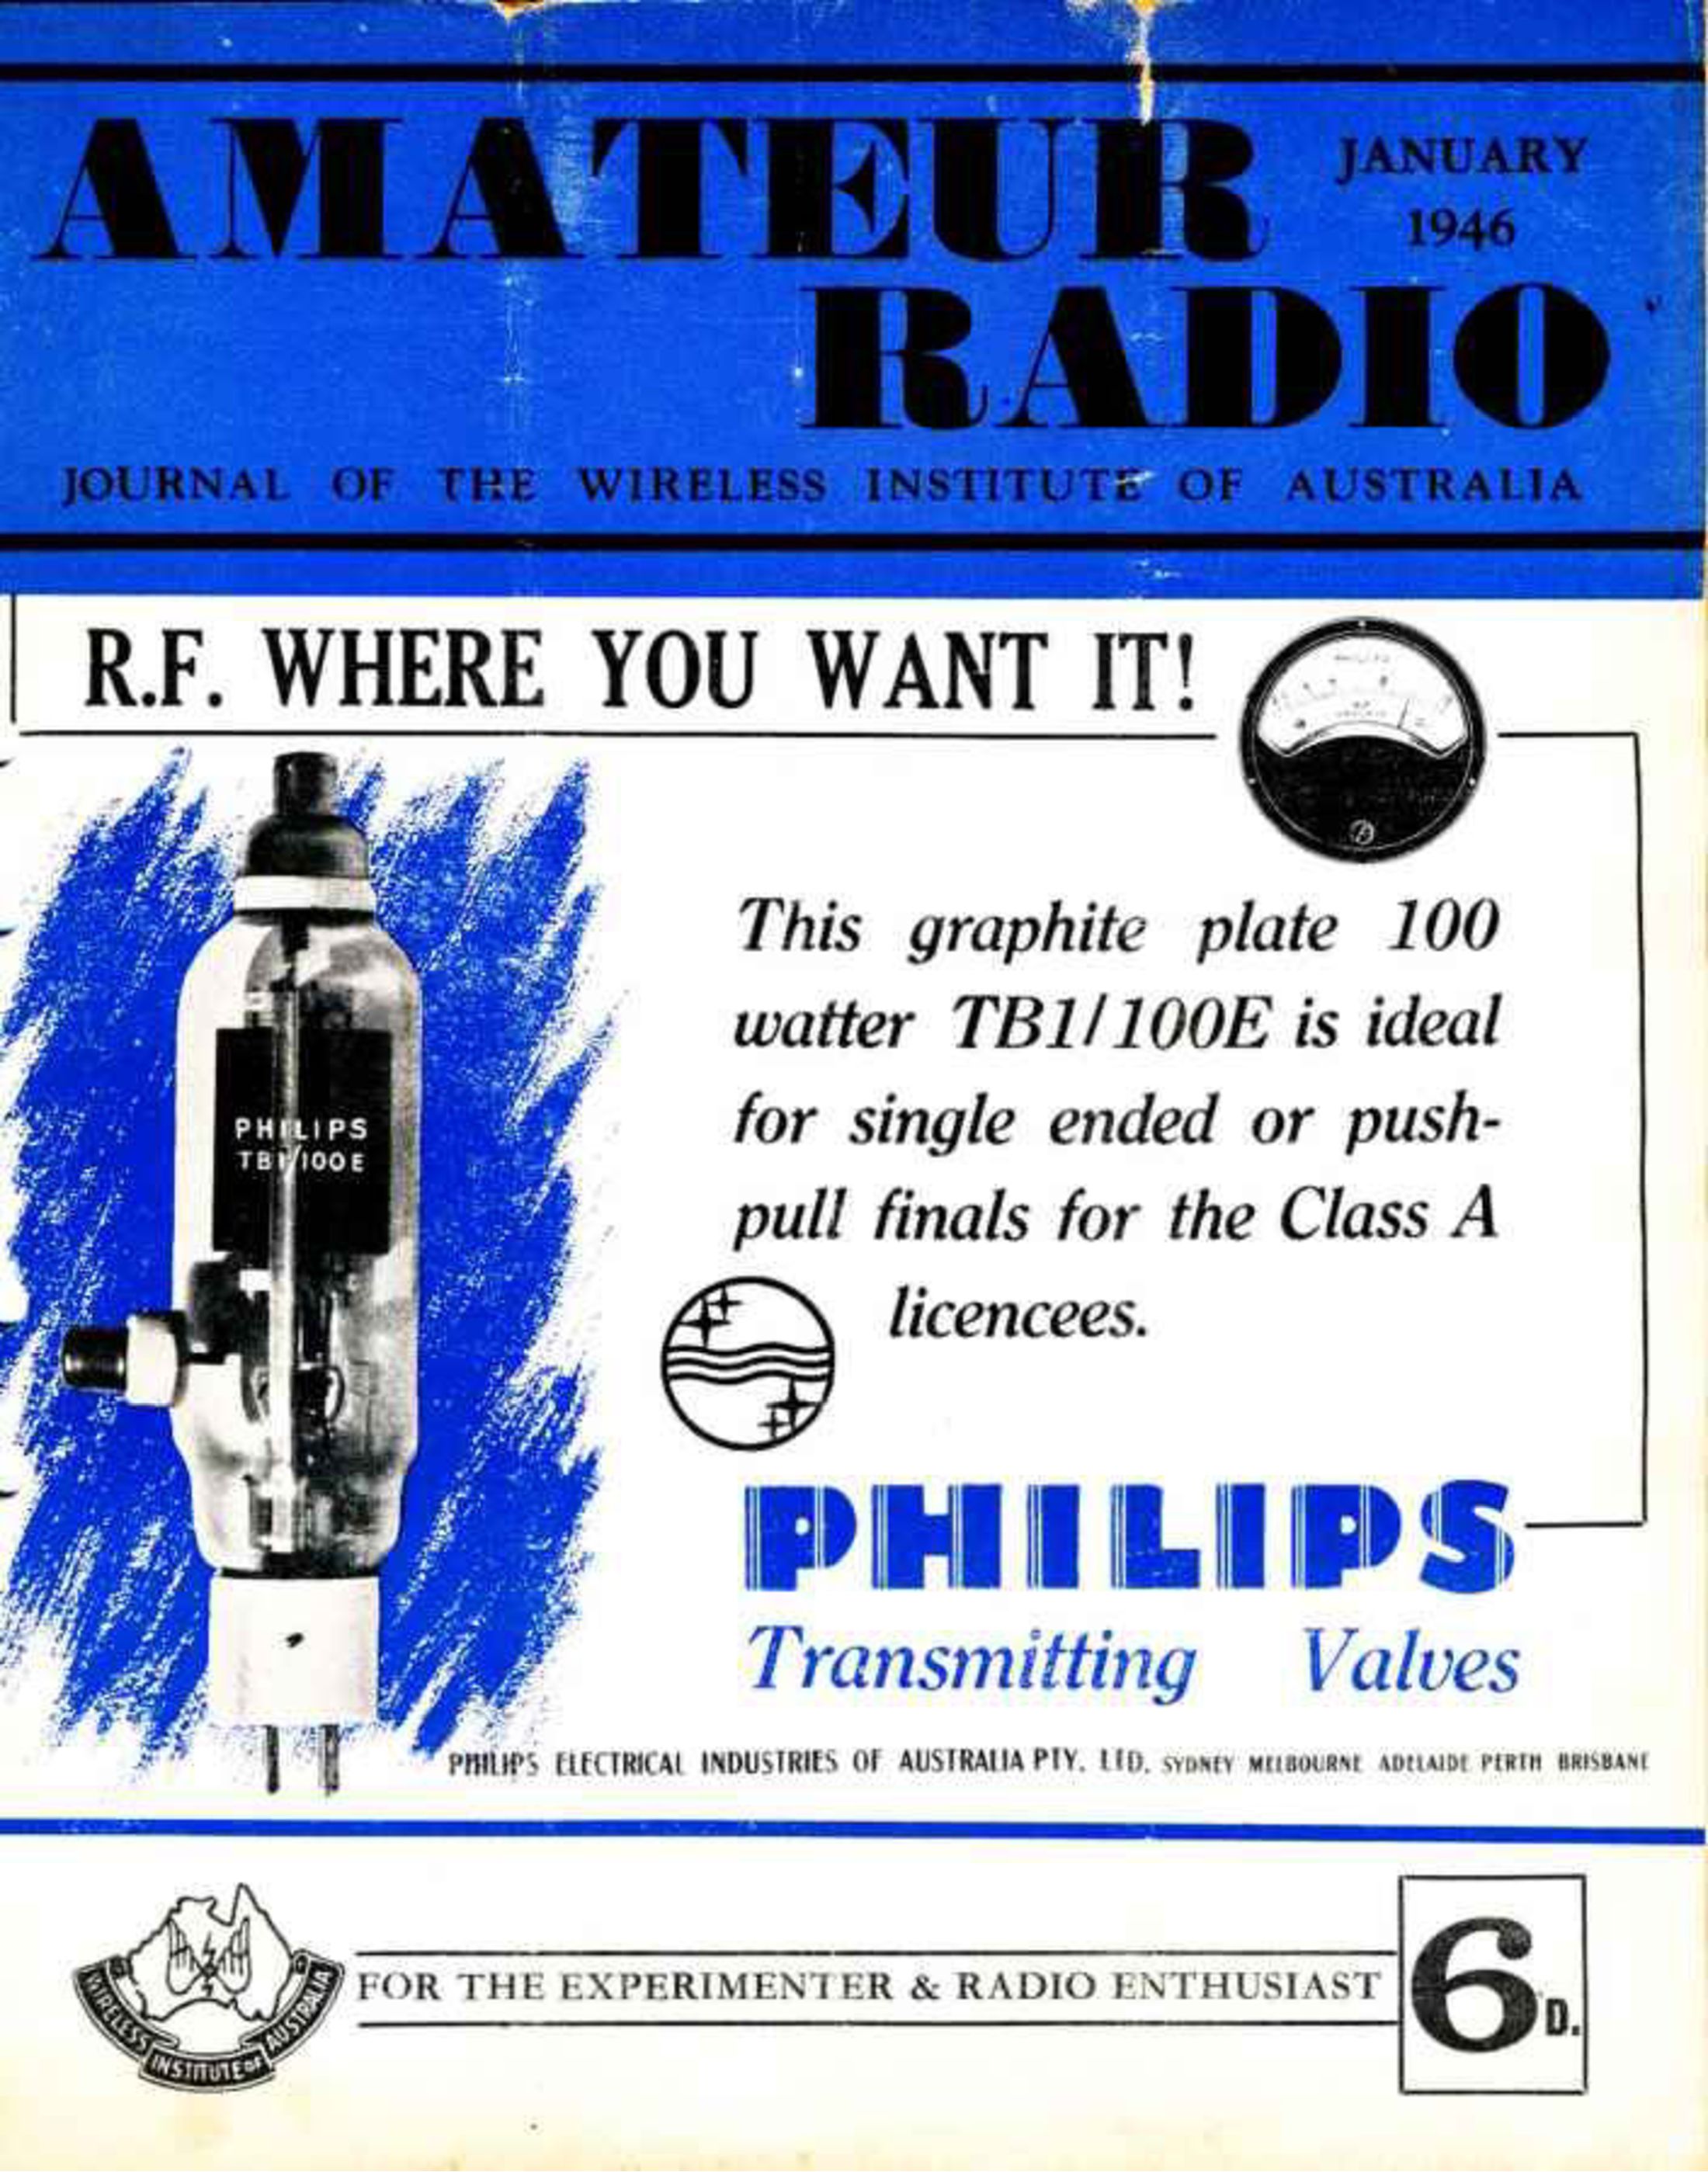 AmateurRadio Jan 1946